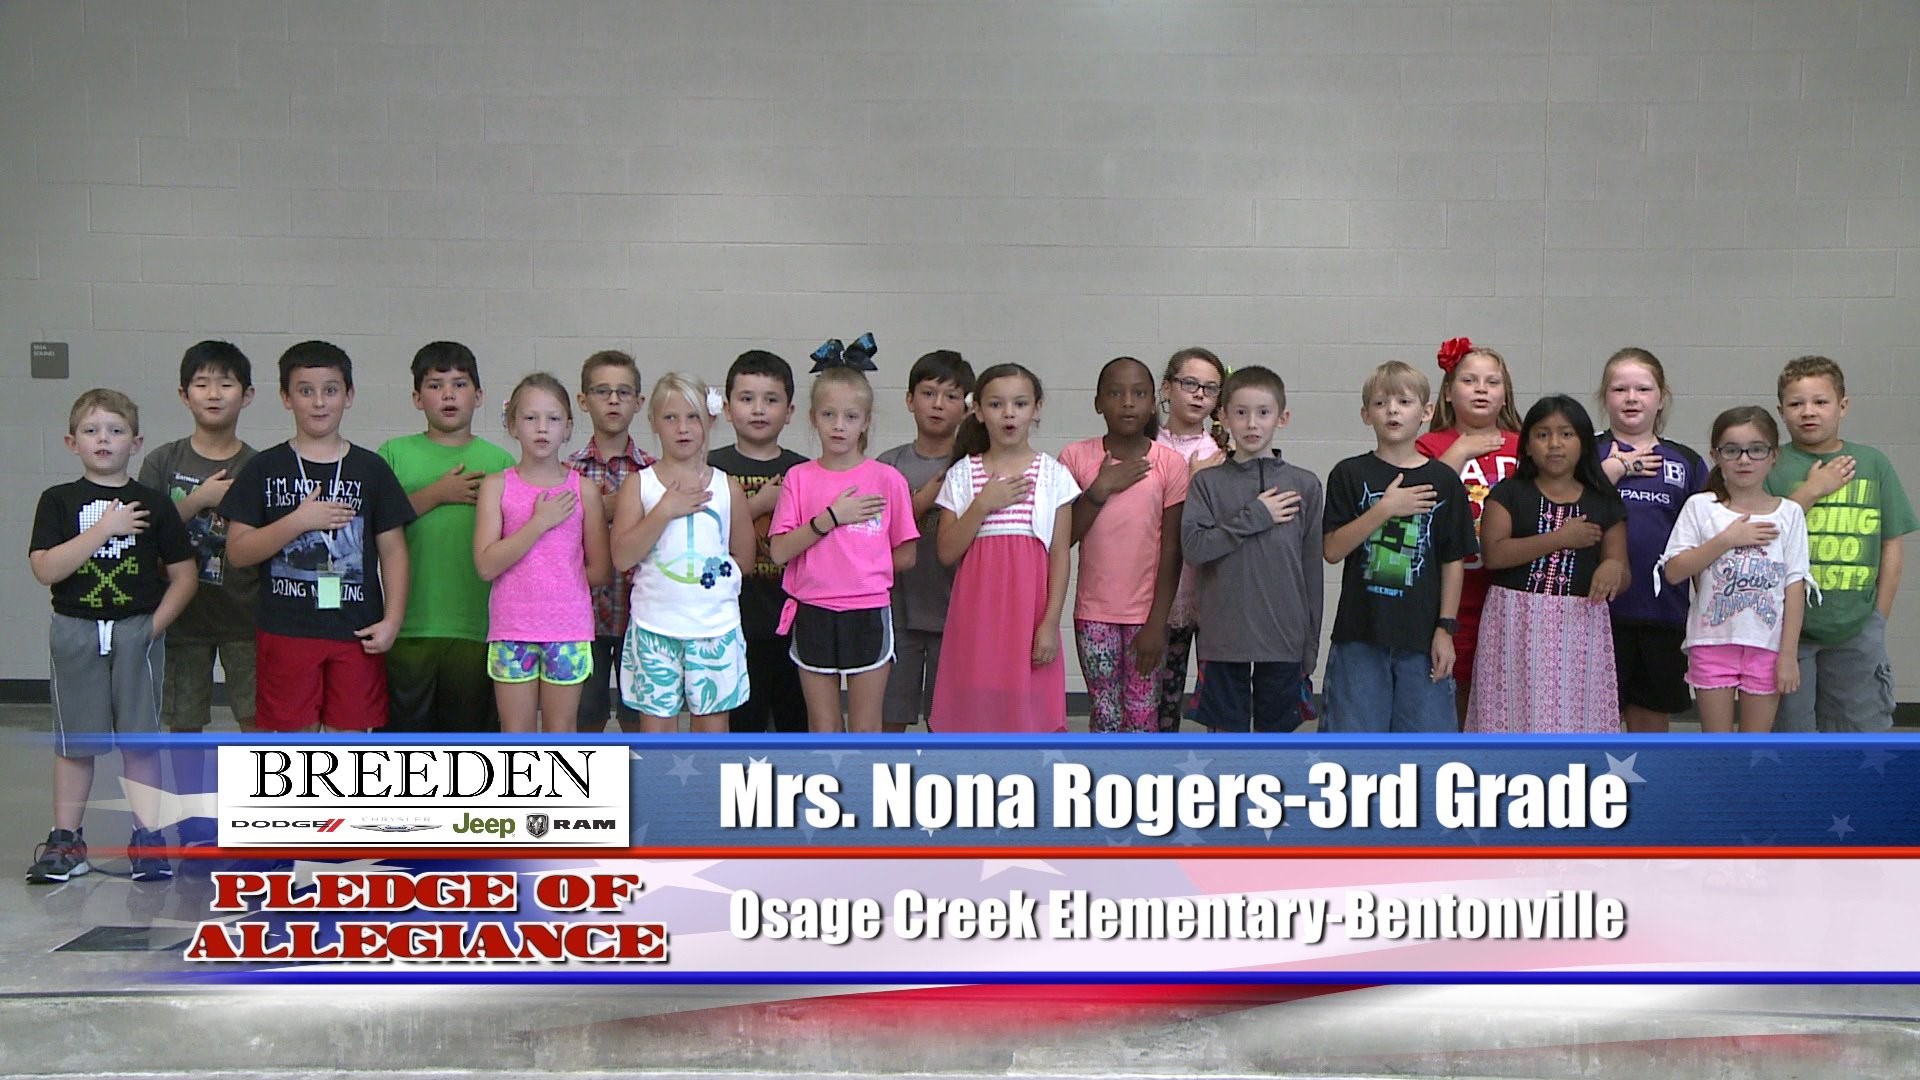 Mrs. Nona Rogers  3rd Grade  Osage Creek Elementary  Bentonville